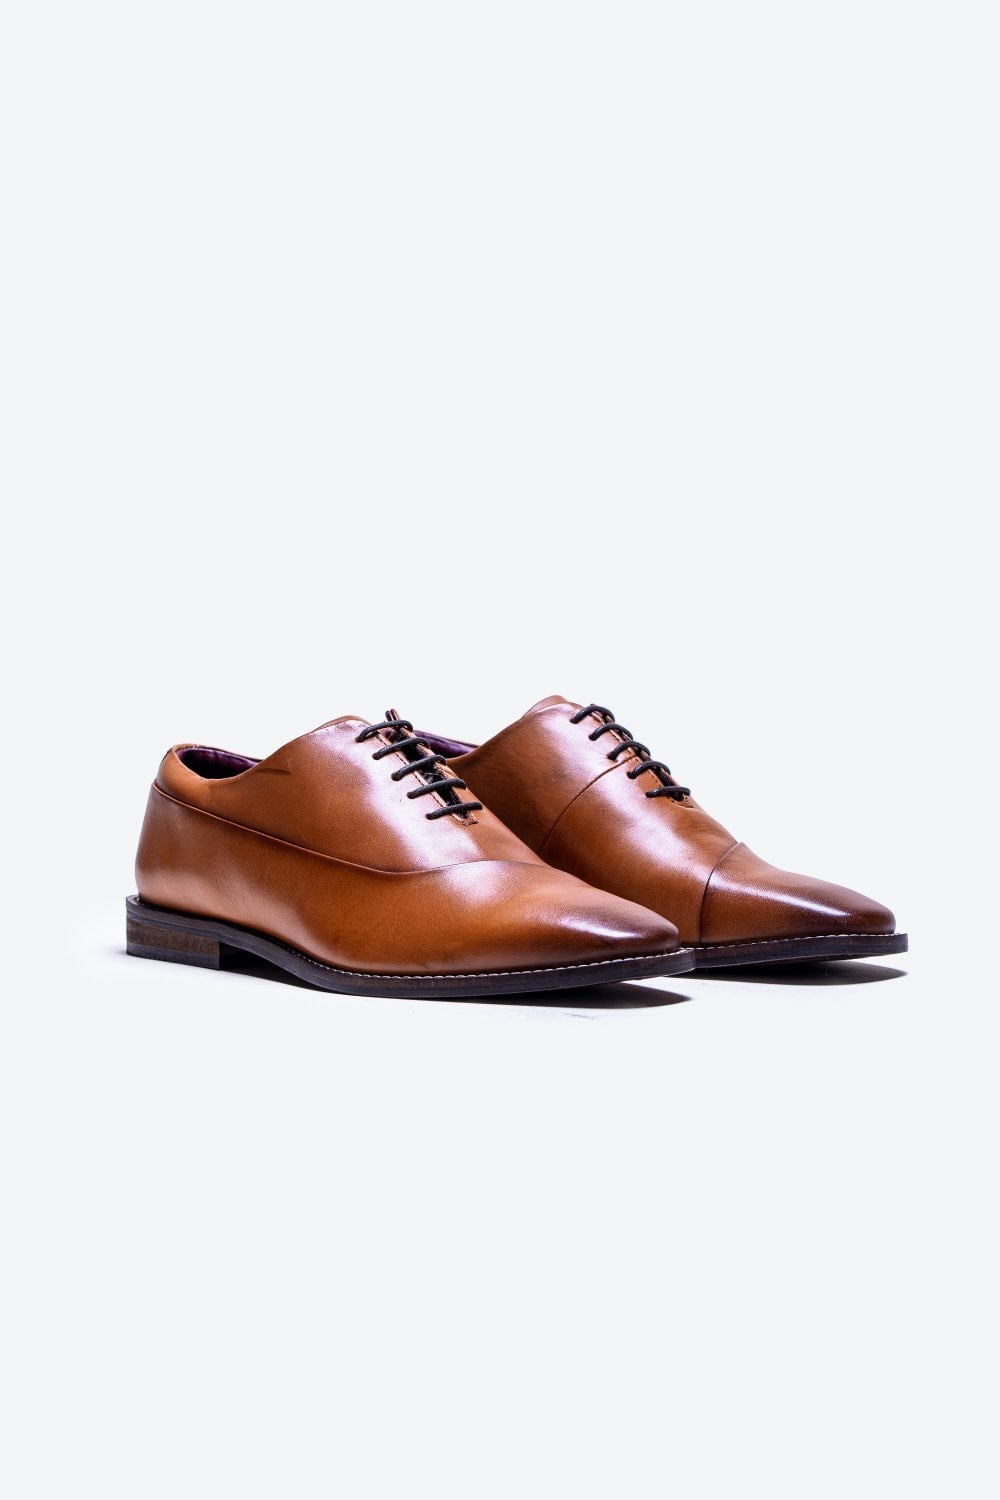 Men's Genuine Leather Oxford Shoes- SEVILLE - Tan